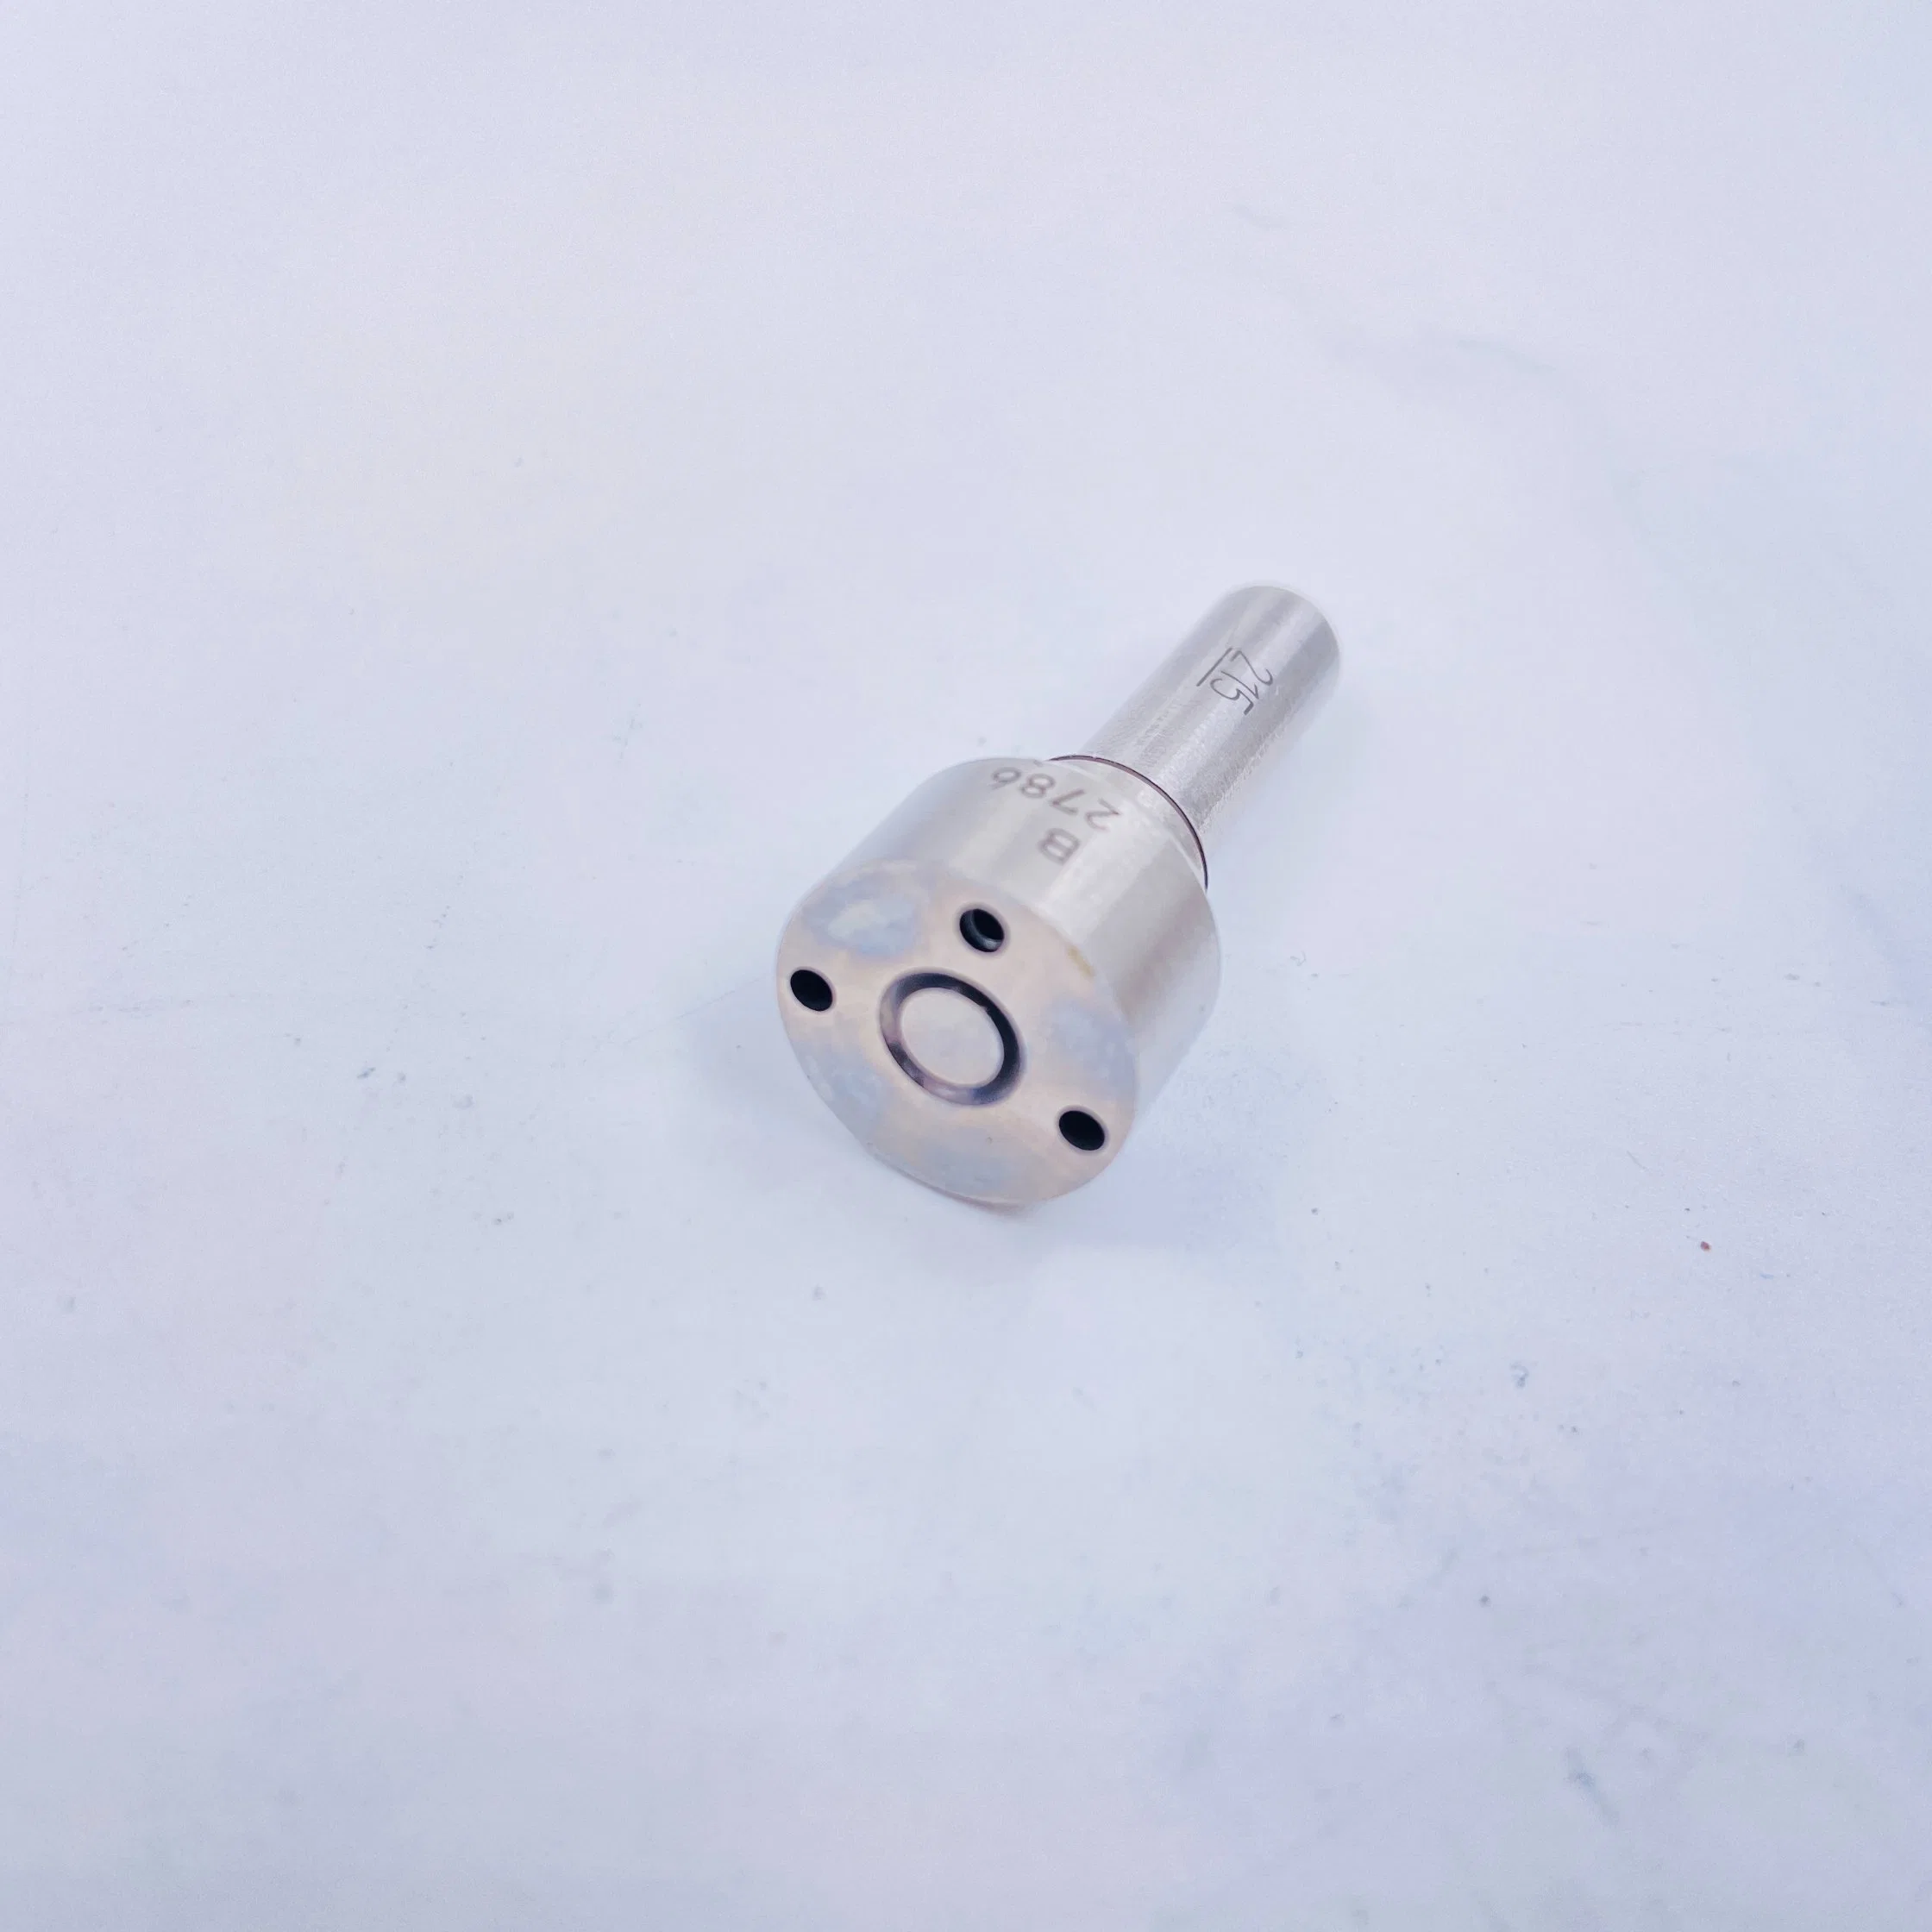 Original Common Rail Fuel Injector Nozzle L222pbc L028pbc for 20440388 21586284 Fuel Injector Nozzle Diesel Injector Nozzle